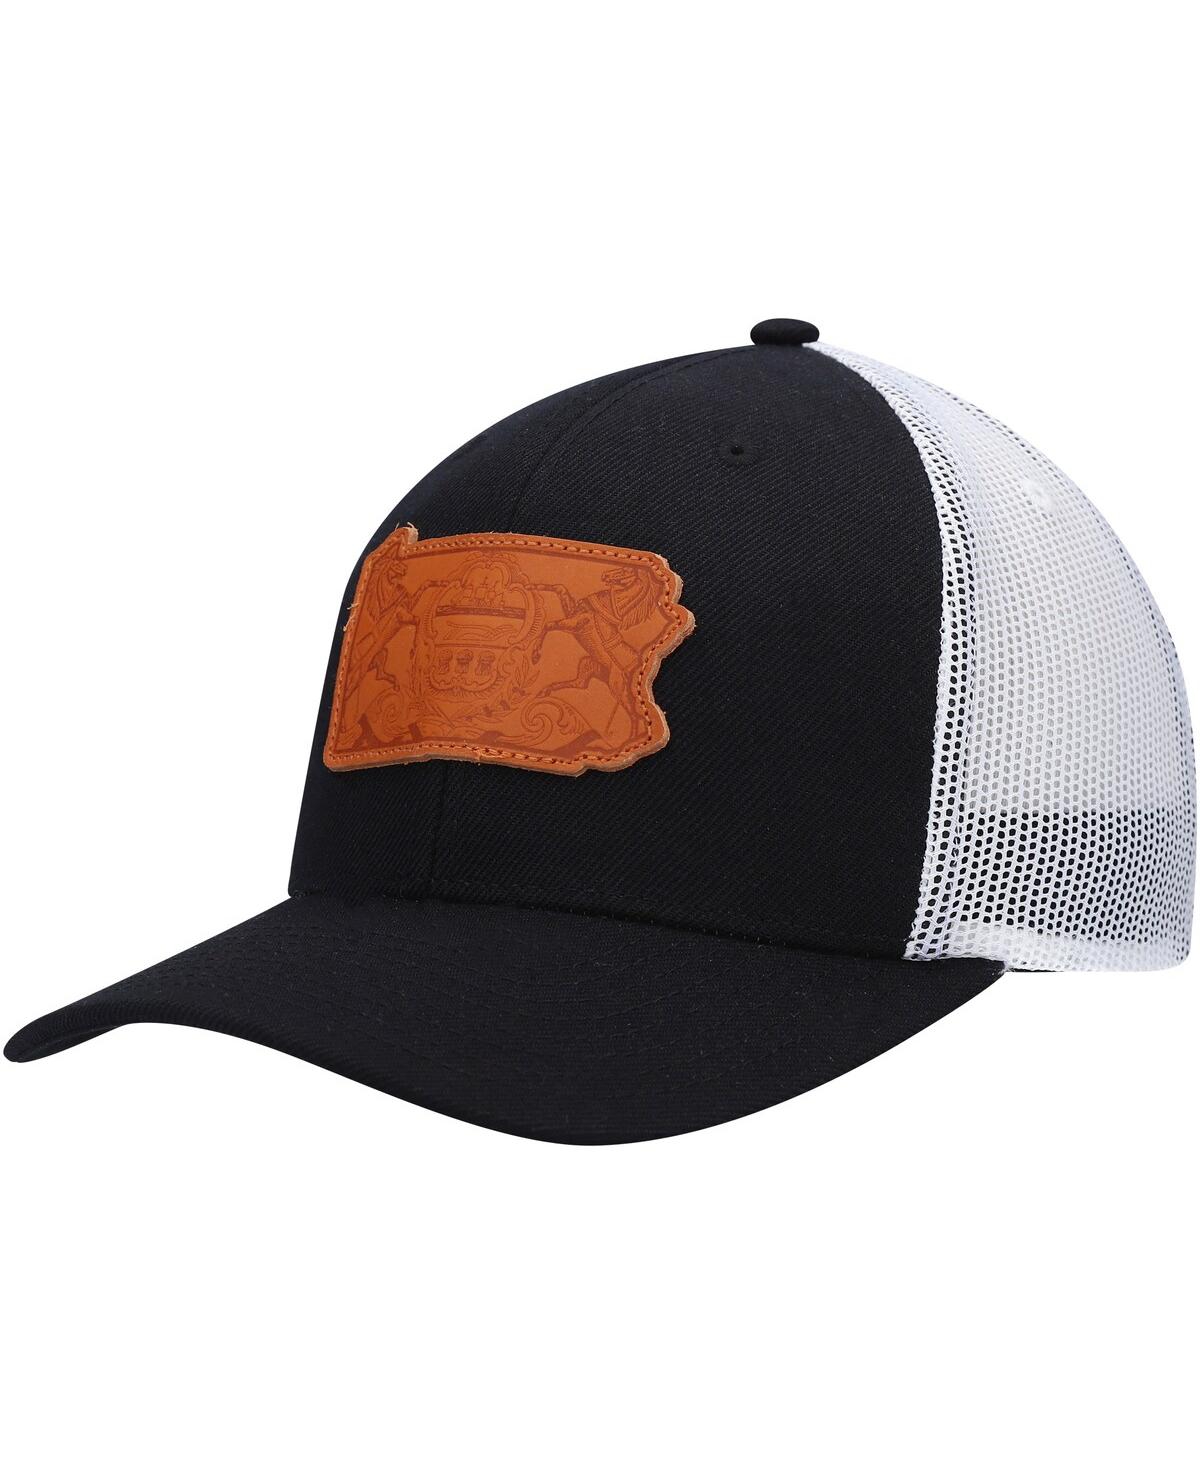 Men's Local Crowns Black Pennsylvania Leather State Applique Trucker Snapback Hat - Black